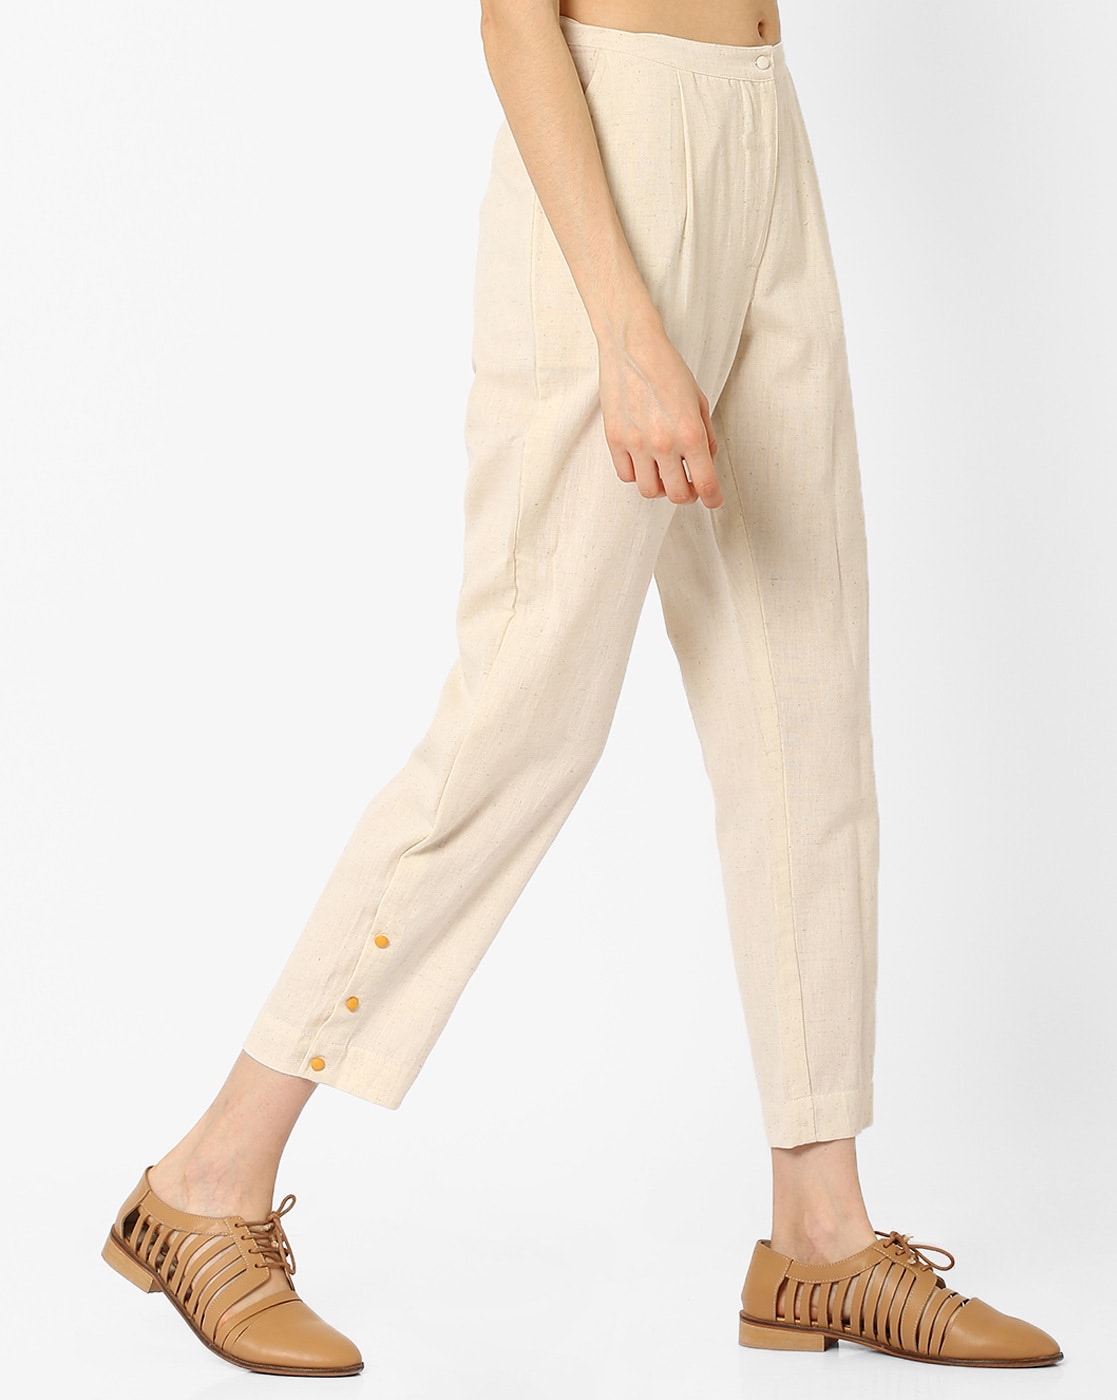 Zara Navy Blue Skinny Trousers Sz L Ankle Length Career Cigarette Pants  Chic | eBay